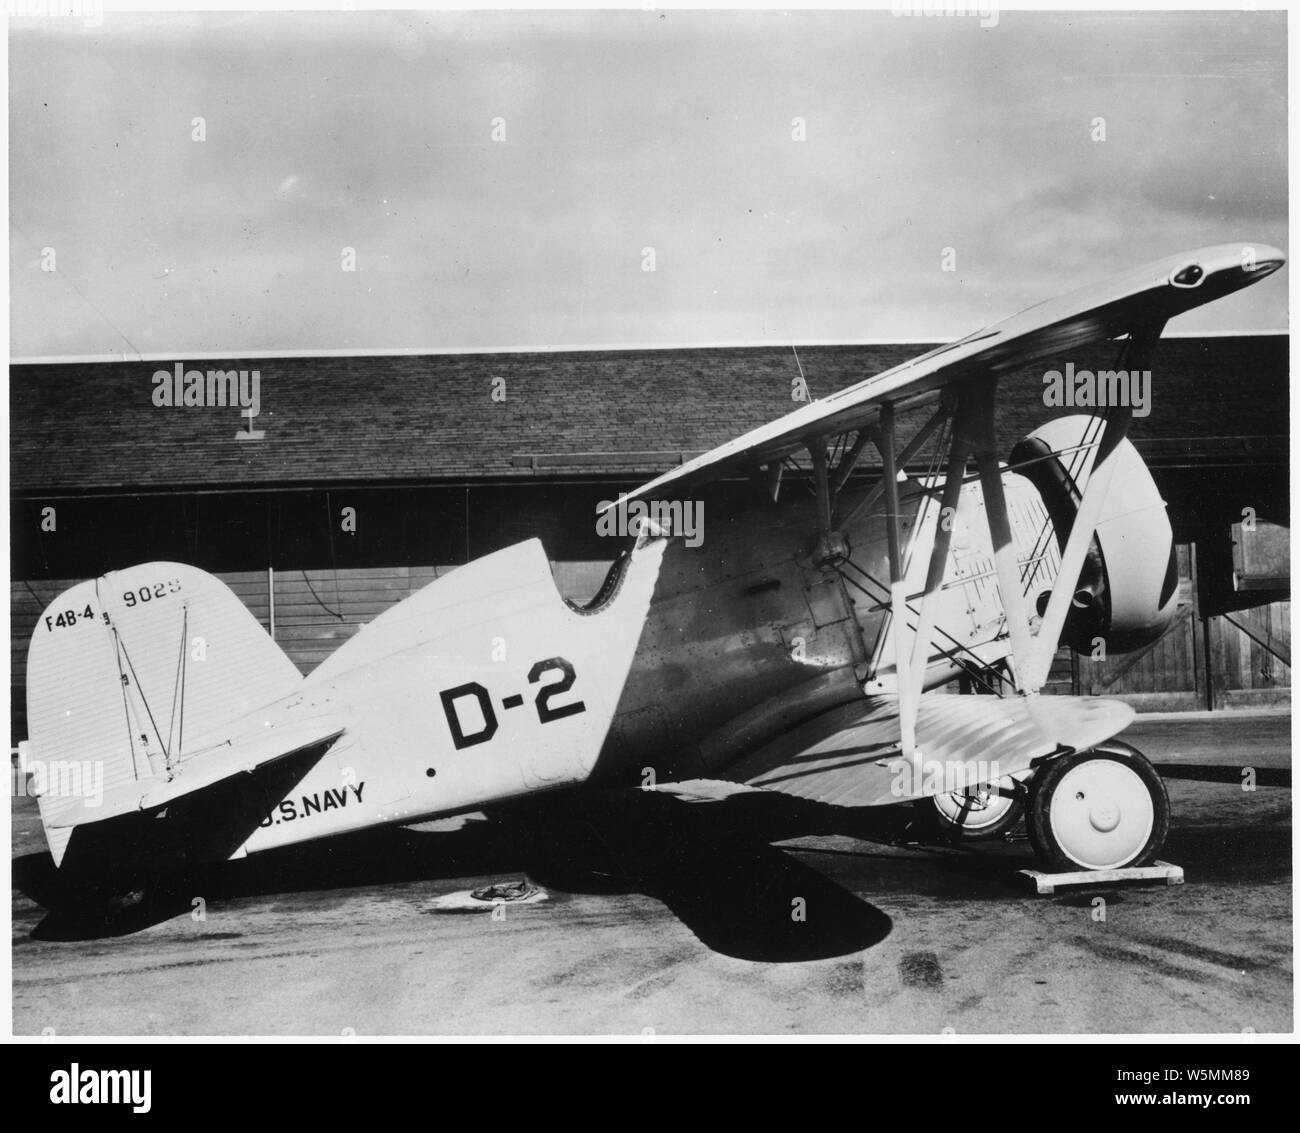 F4B-4 from squadron D-2 (pre-World War II). Stock Photo